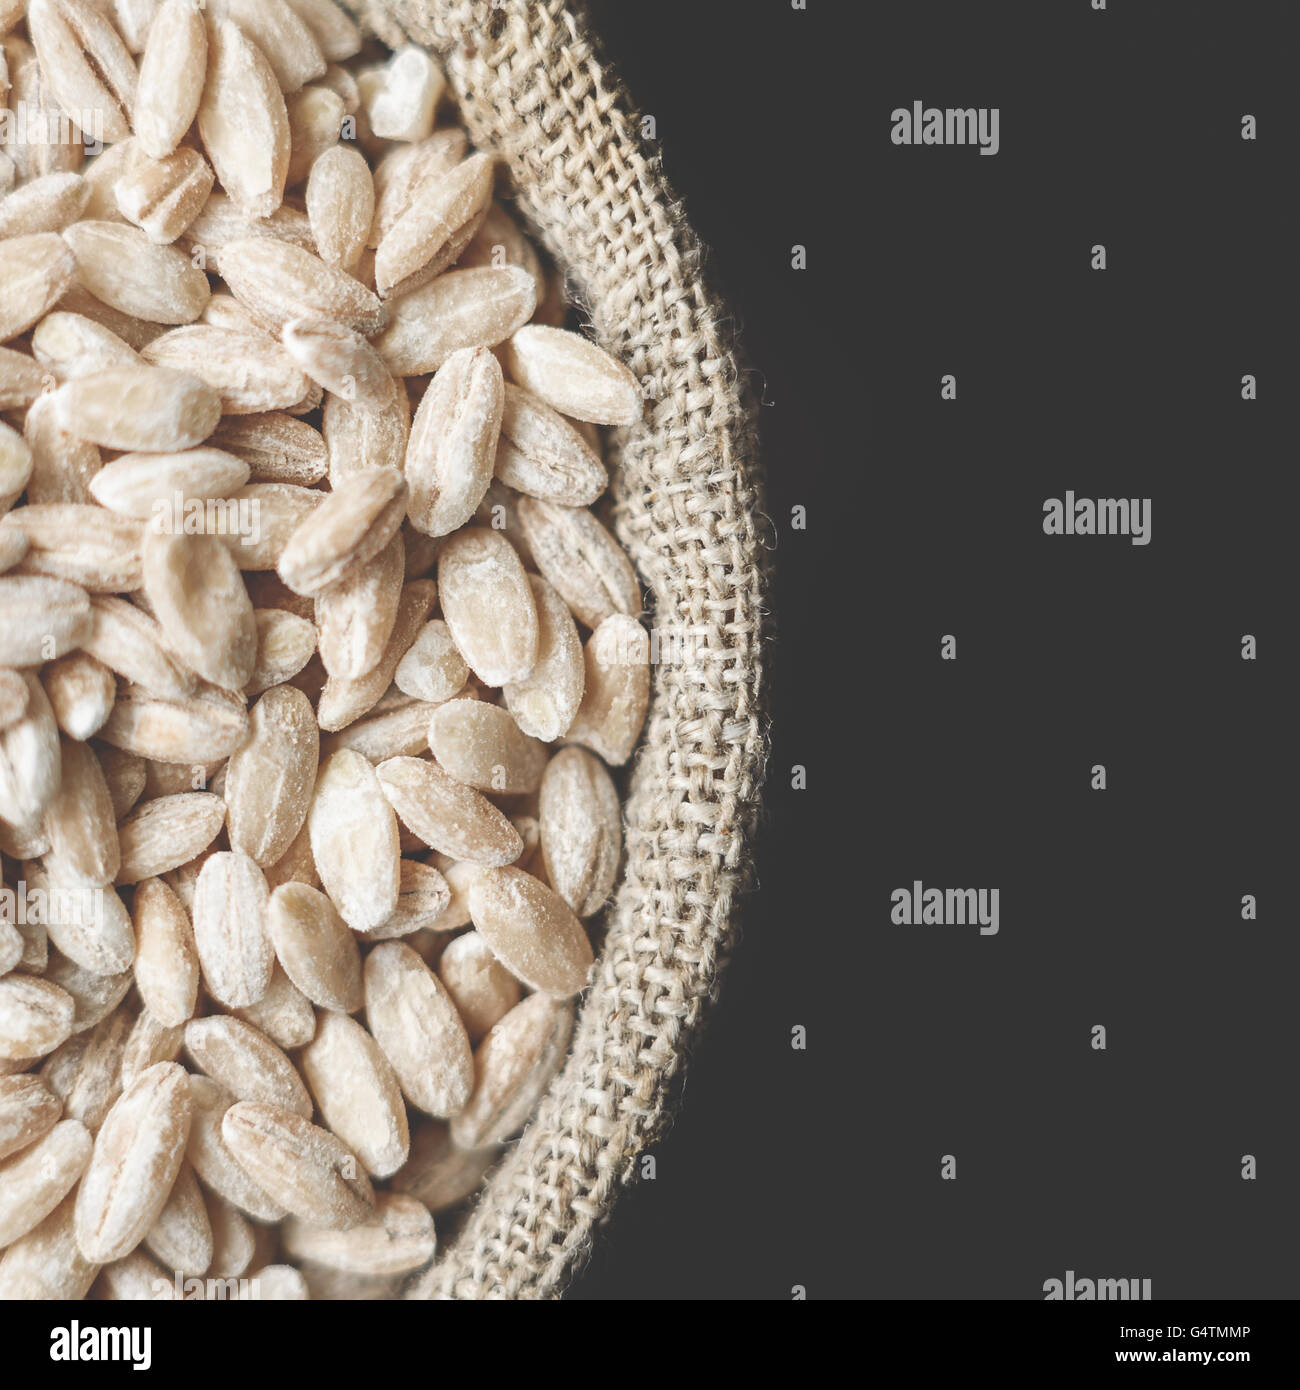 grain barley in flax sack on grey background Stock Photo